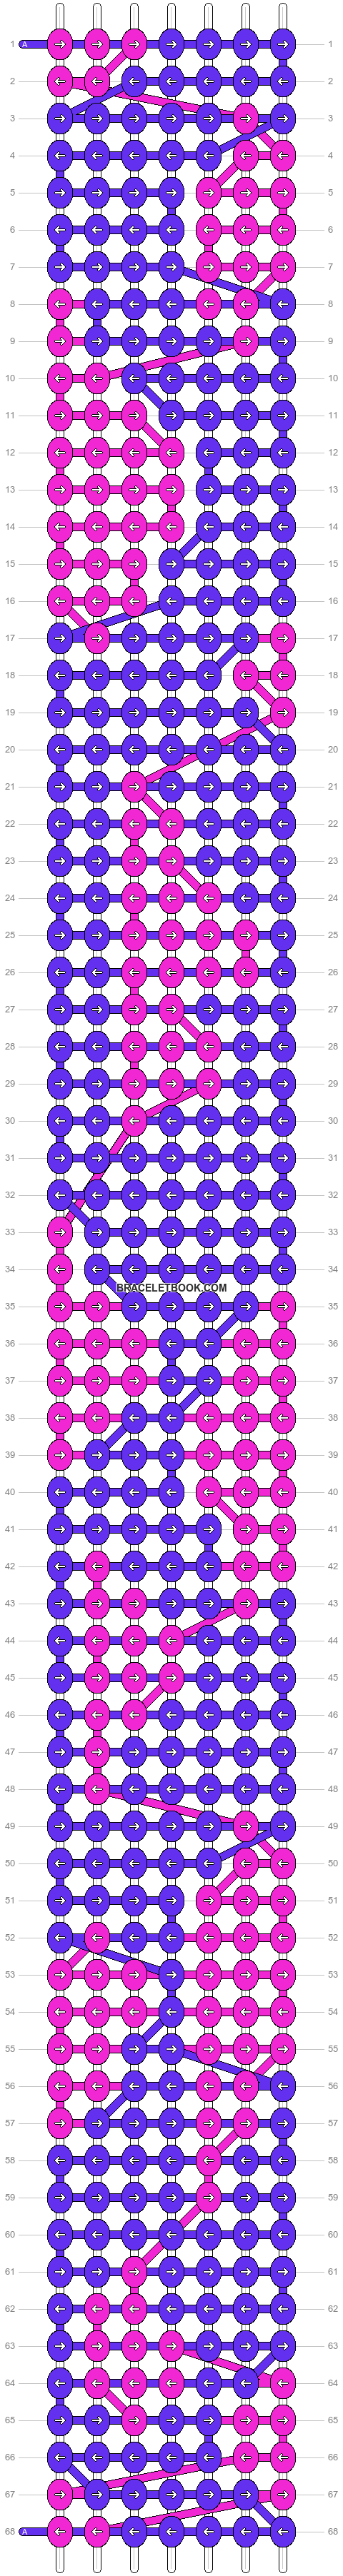 Alpha pattern #1654 variation #33798 pattern